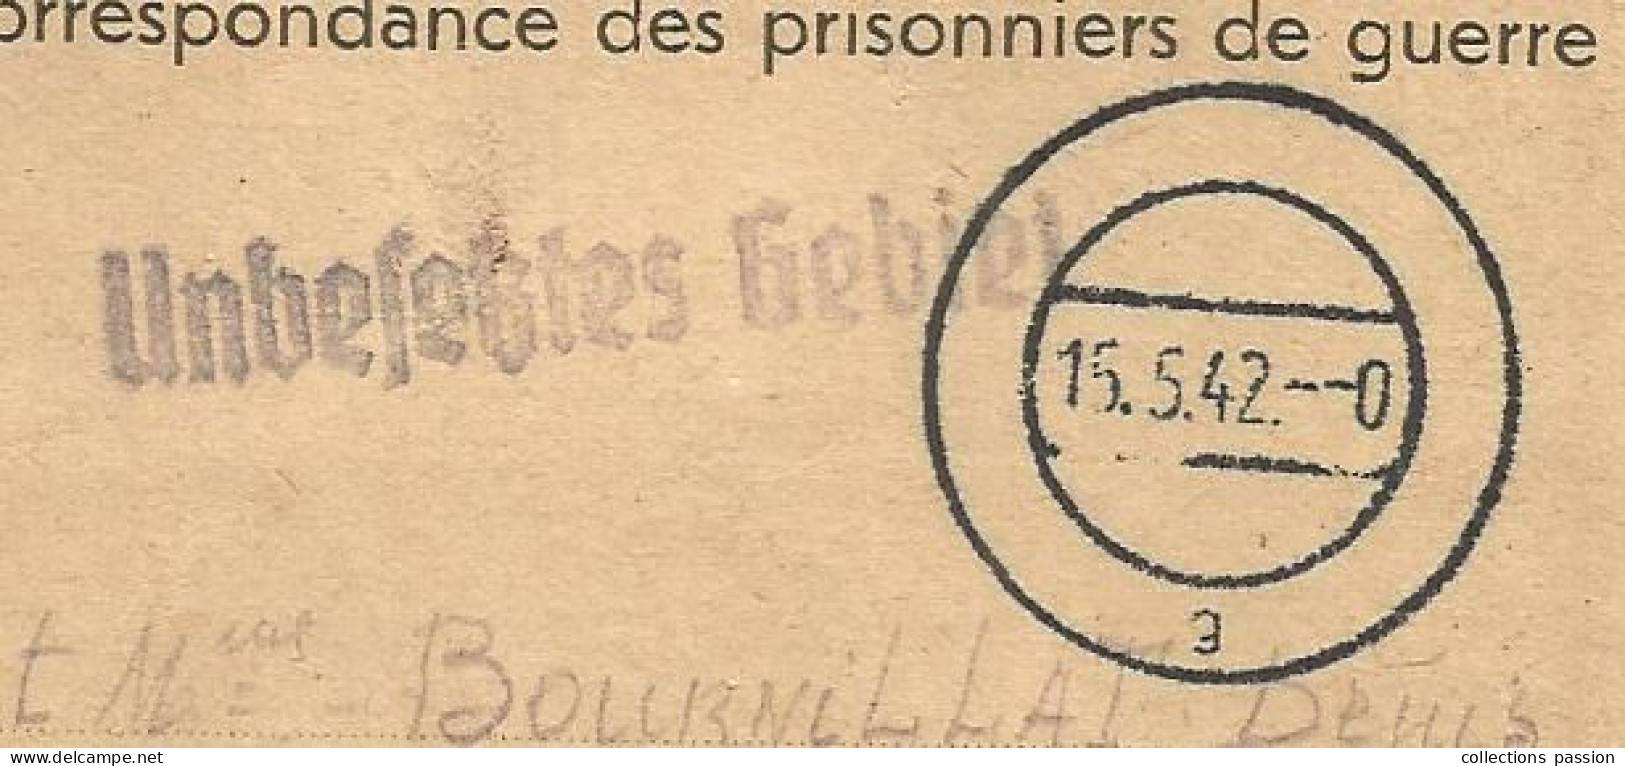 CORRESPONDANCE DES PRISONNIERS DE GUERRE, Kriegsgefangenenpost, Stalag XVIII C Markt Pongau, 1942 - Prigionieri